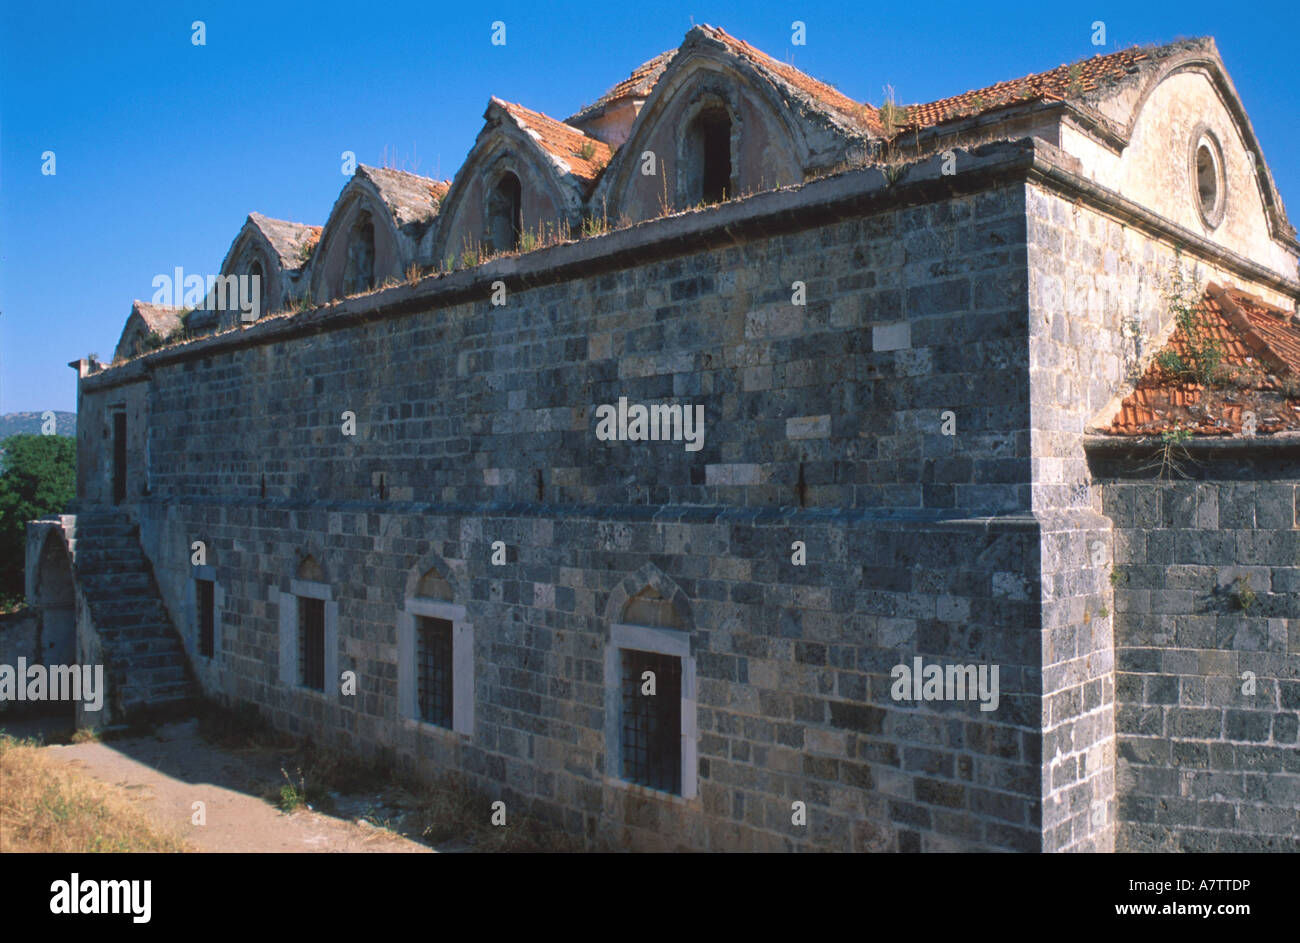 Stone wall exterior of old building, Kayakoy, Fethiye, Turkey Stock Photo